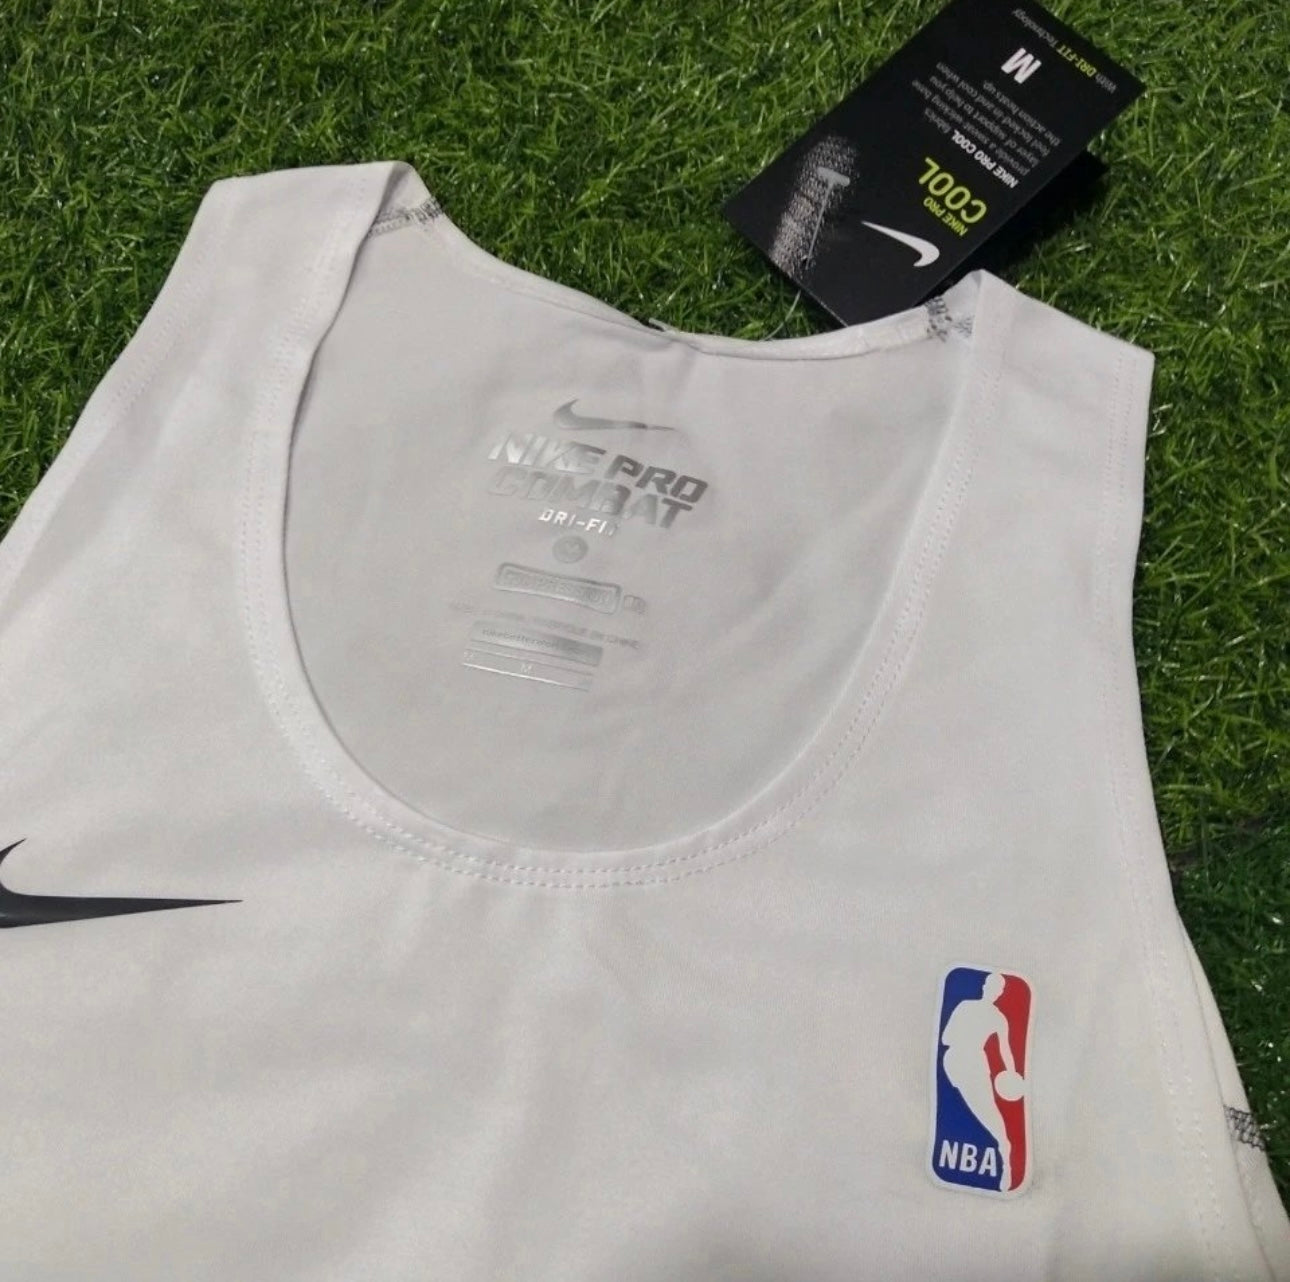 Nike NBA Pro Breathe Compression Shirt - Men's Basketball - Size M - Black